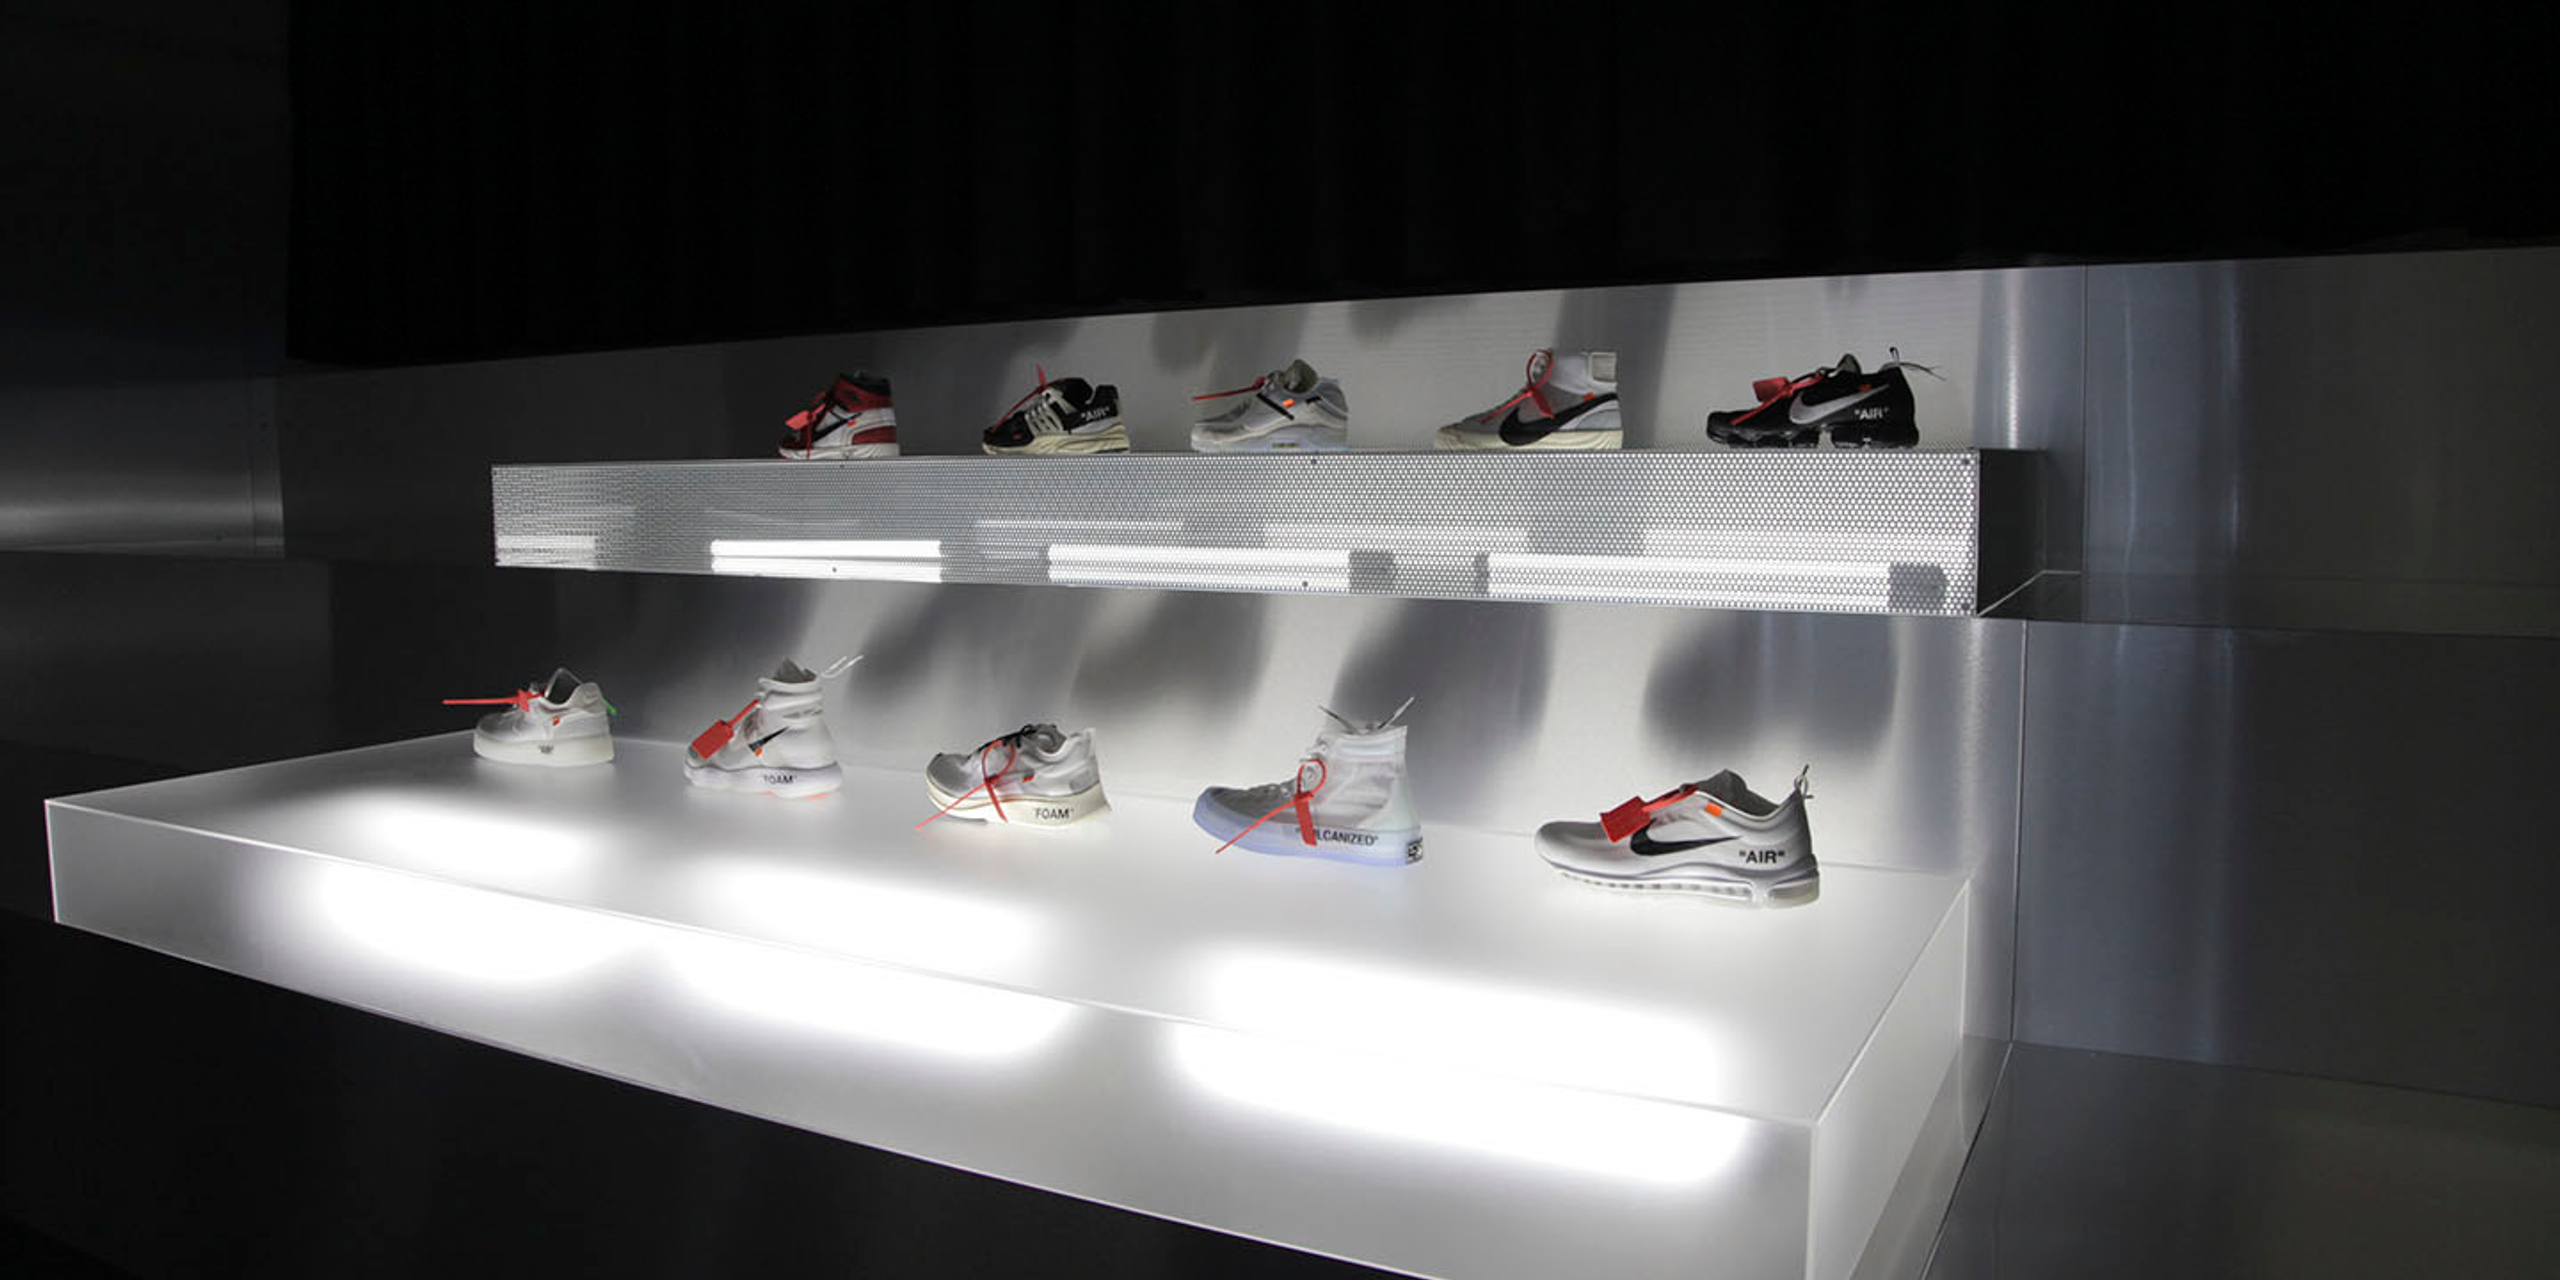 Kim Jones Unveils NikeLab Air Max Shoe for Dover Street Market London Drop  - WearTesters